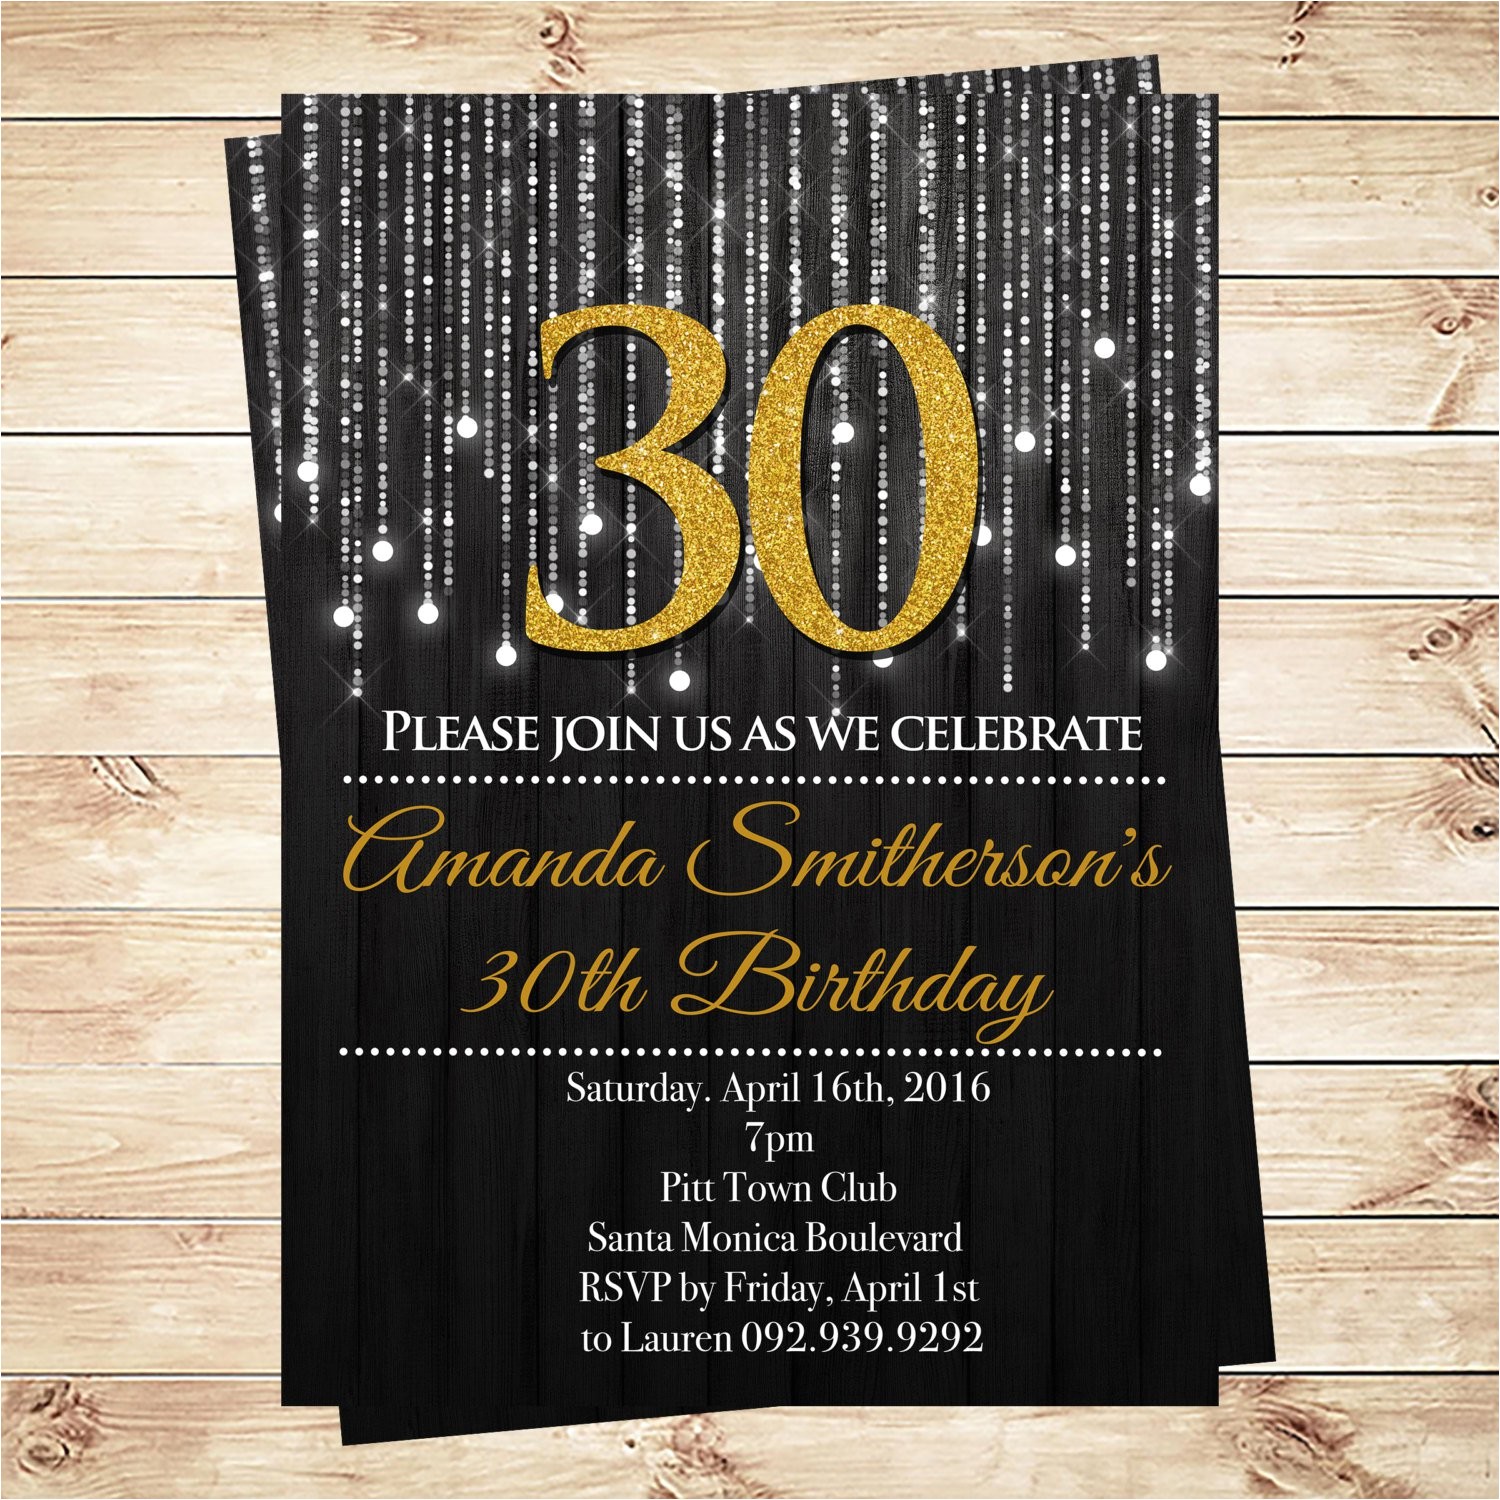 30th birthday invitations